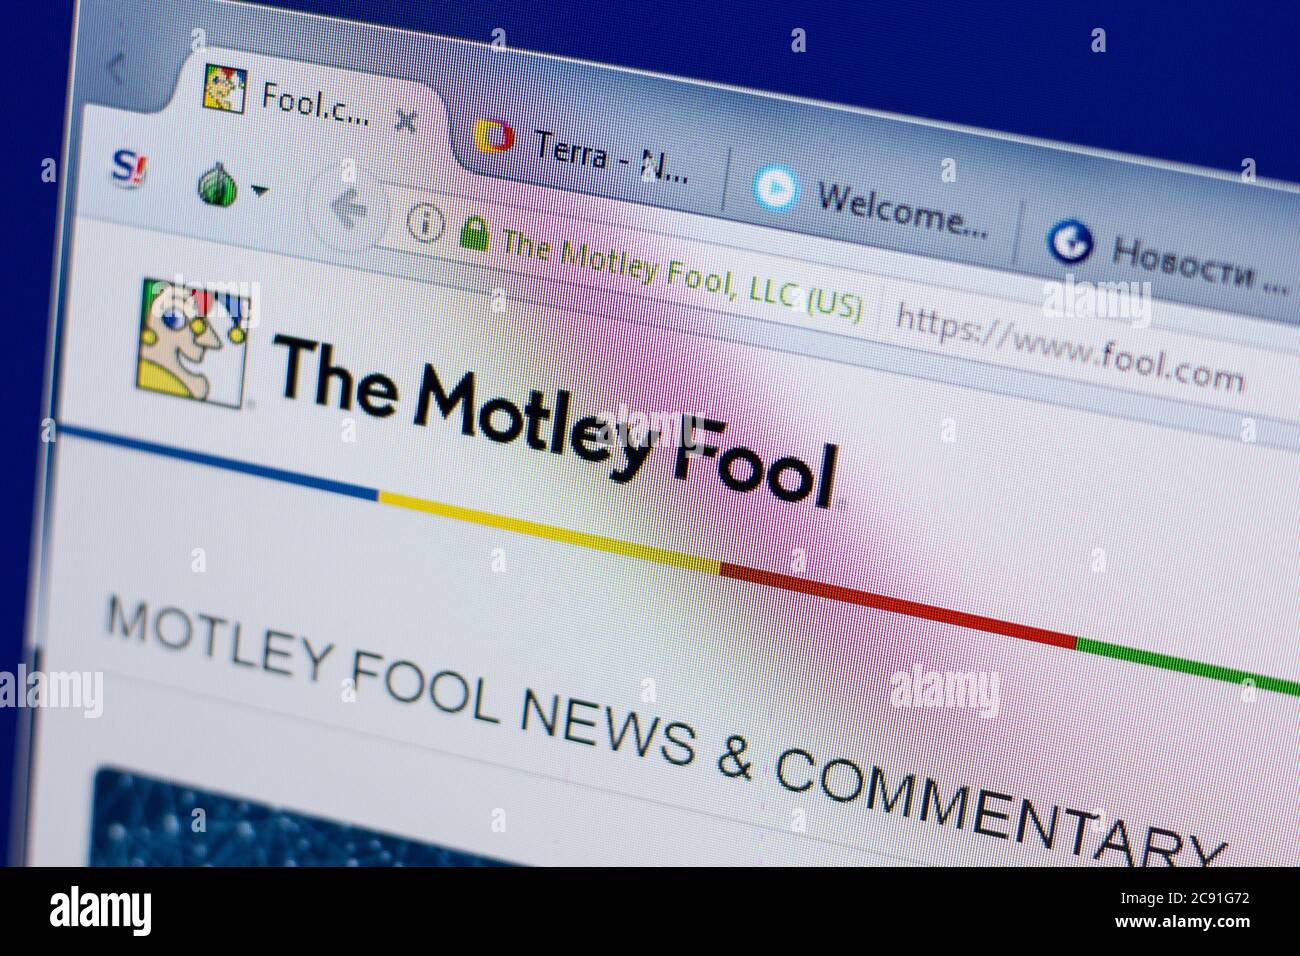 Ryazan, Russia - June 17, 2018: Homepage of The Motley Fool website on the display of PC, url - Fool.com Stock Photo